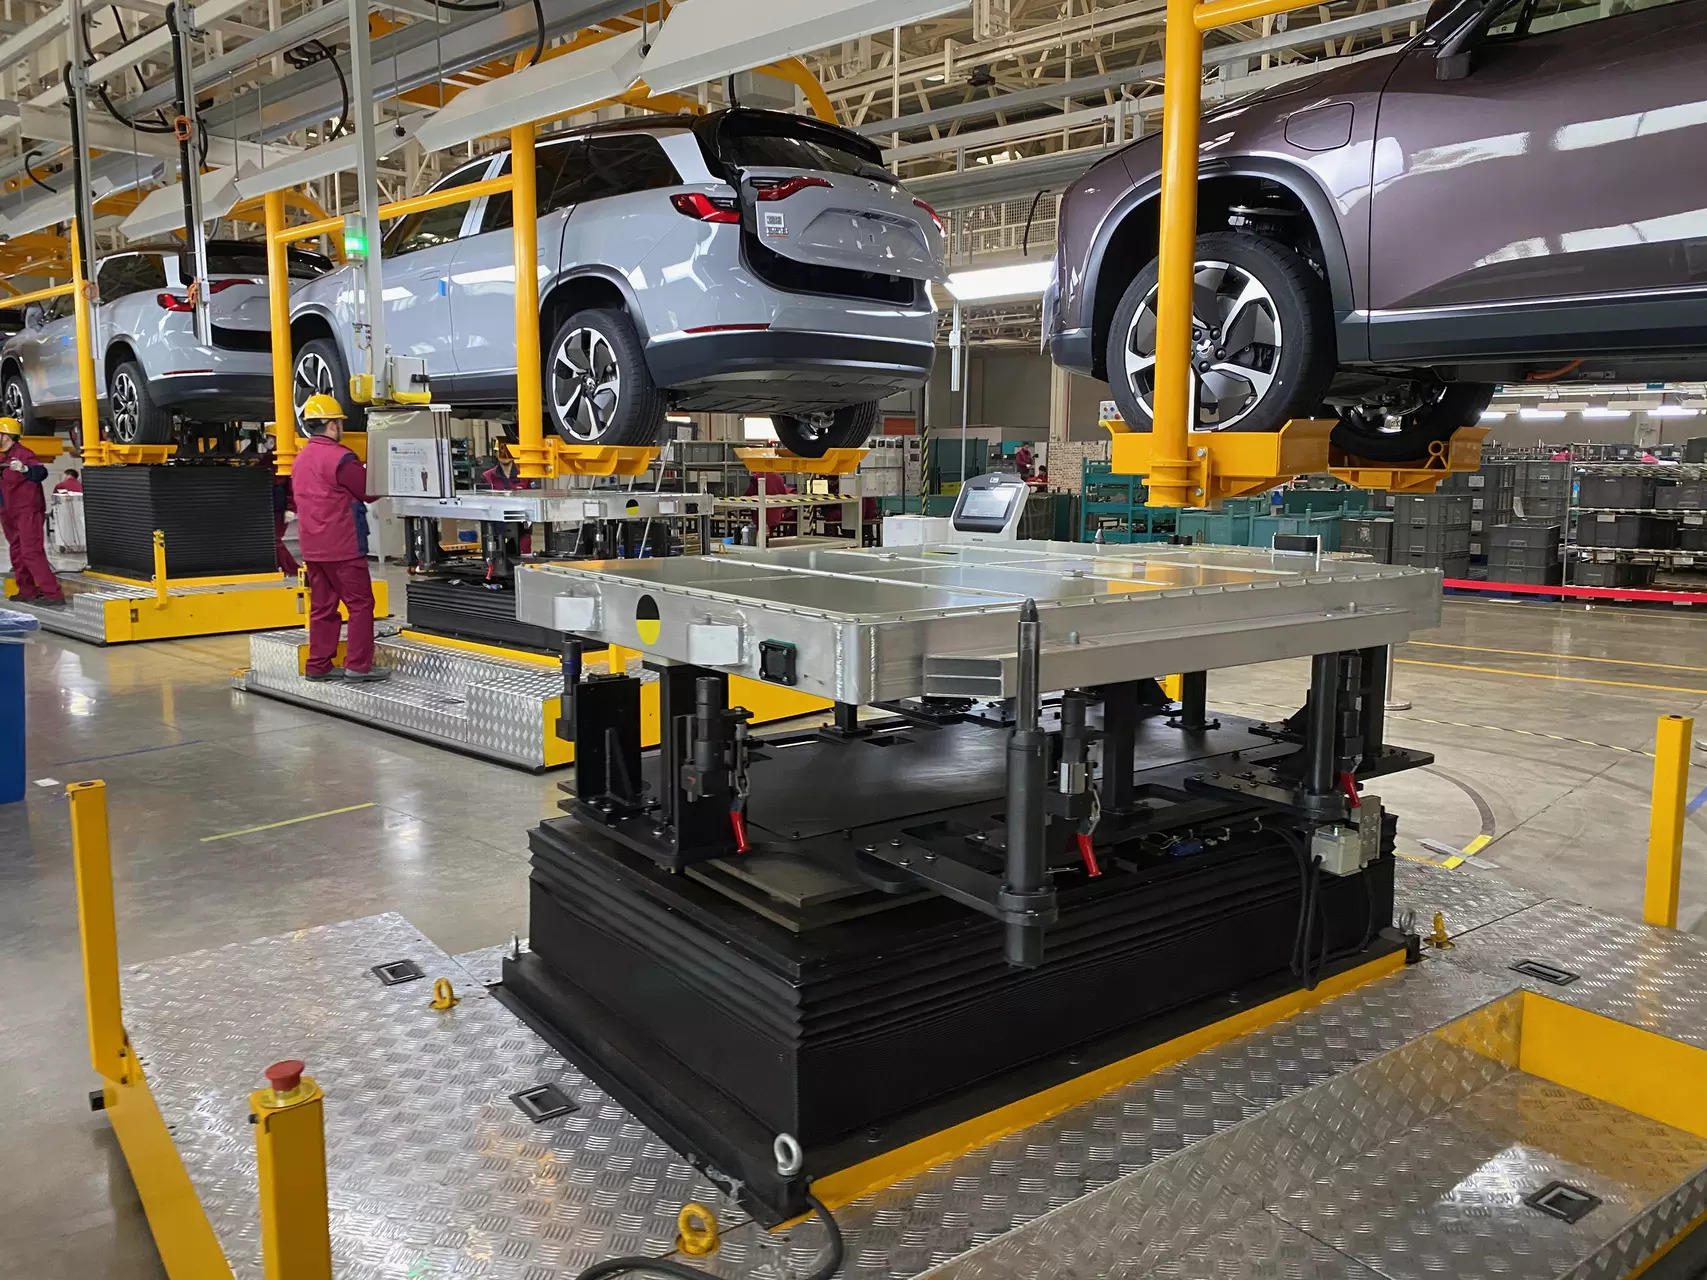 China's EV threat: A carmaker that loses $35,000 a car 